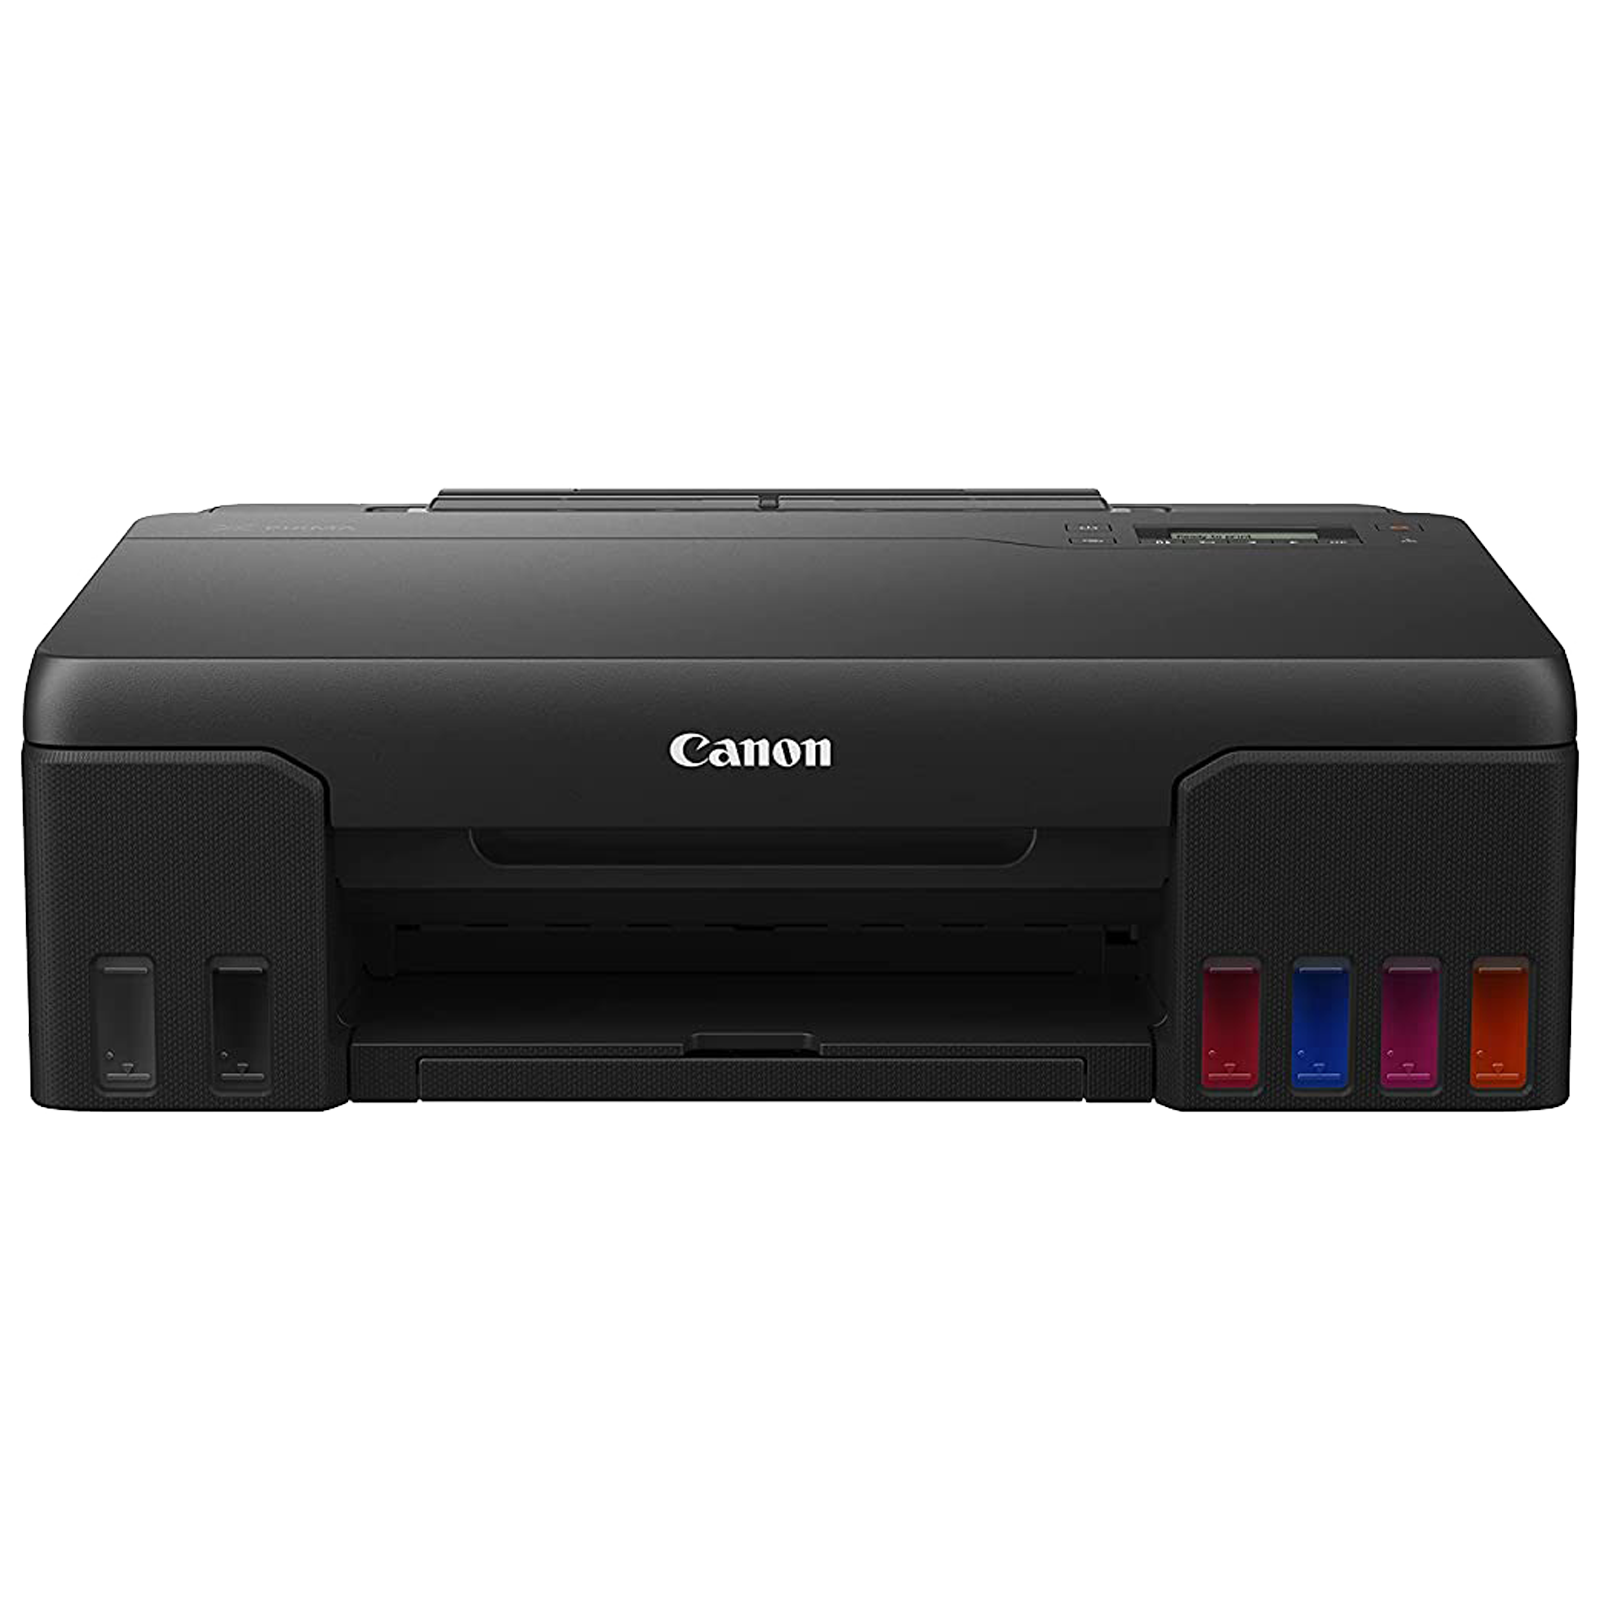 Canon Pixma G570 Wireless Color Ink Tank Printer (Wide Color Gamut, Black)_1